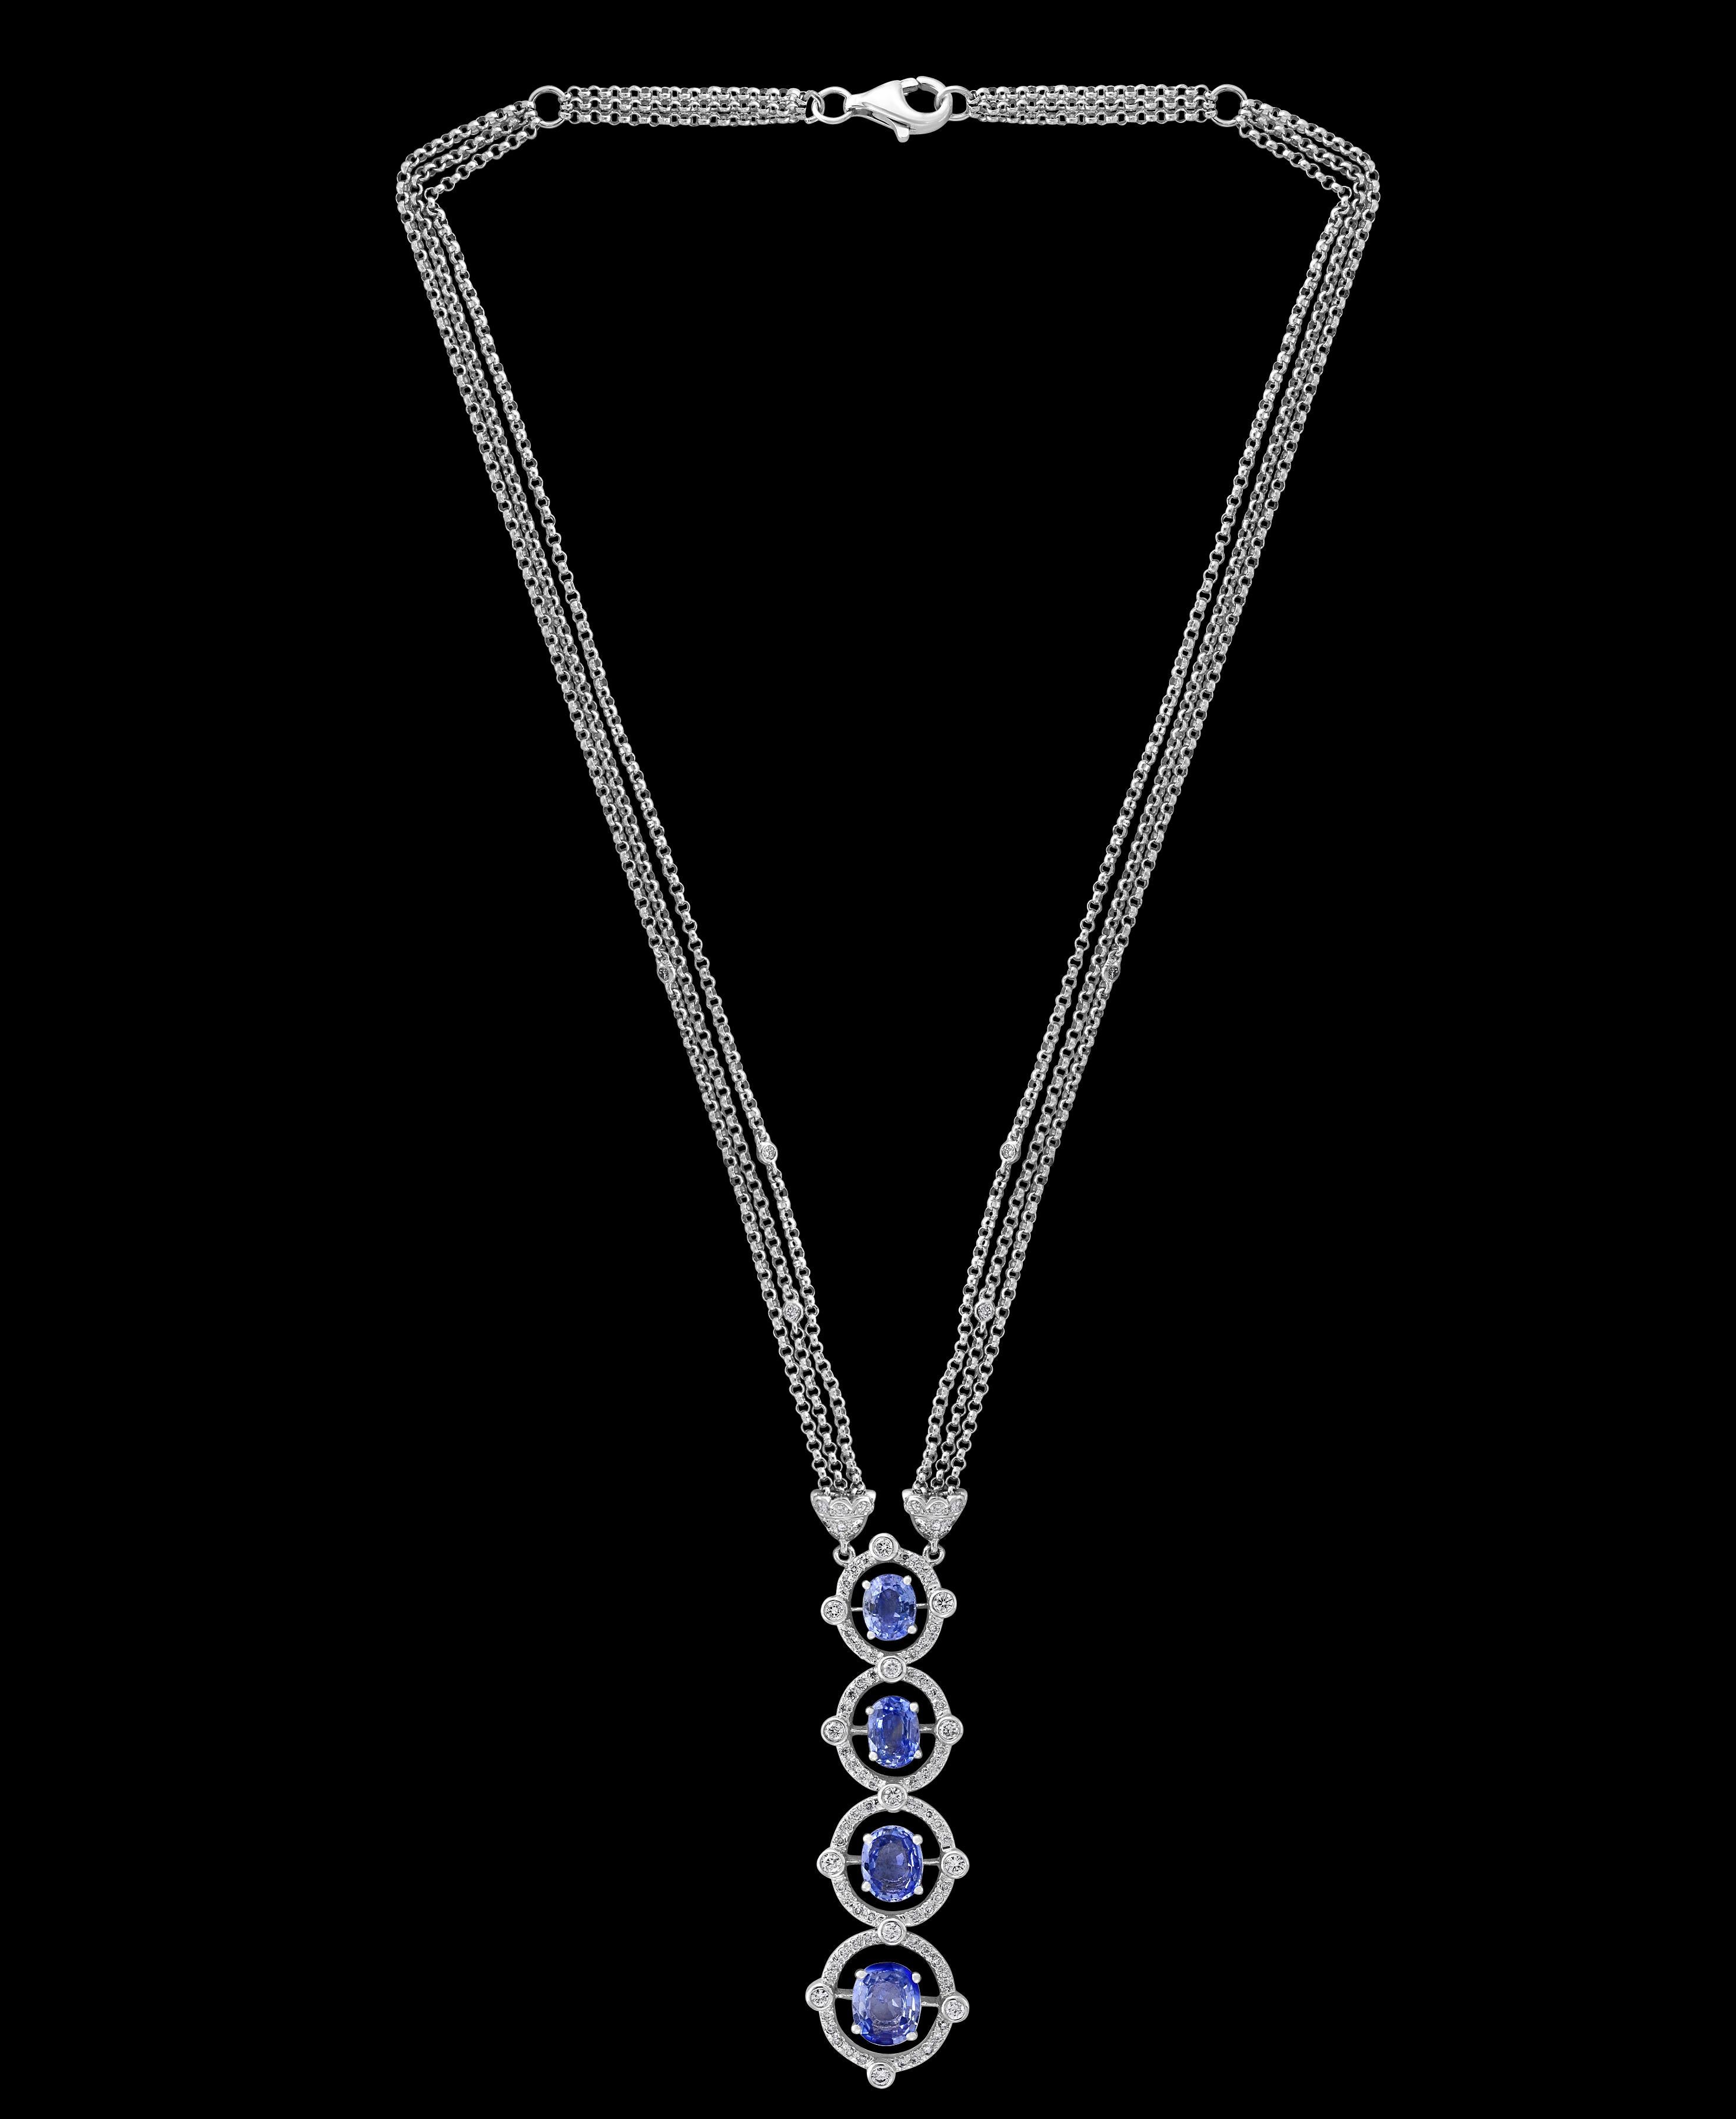 Oval Cut 7 Carat Sapphire and Diamond Pendant or Necklace 18 Karat Gold Multi Chain